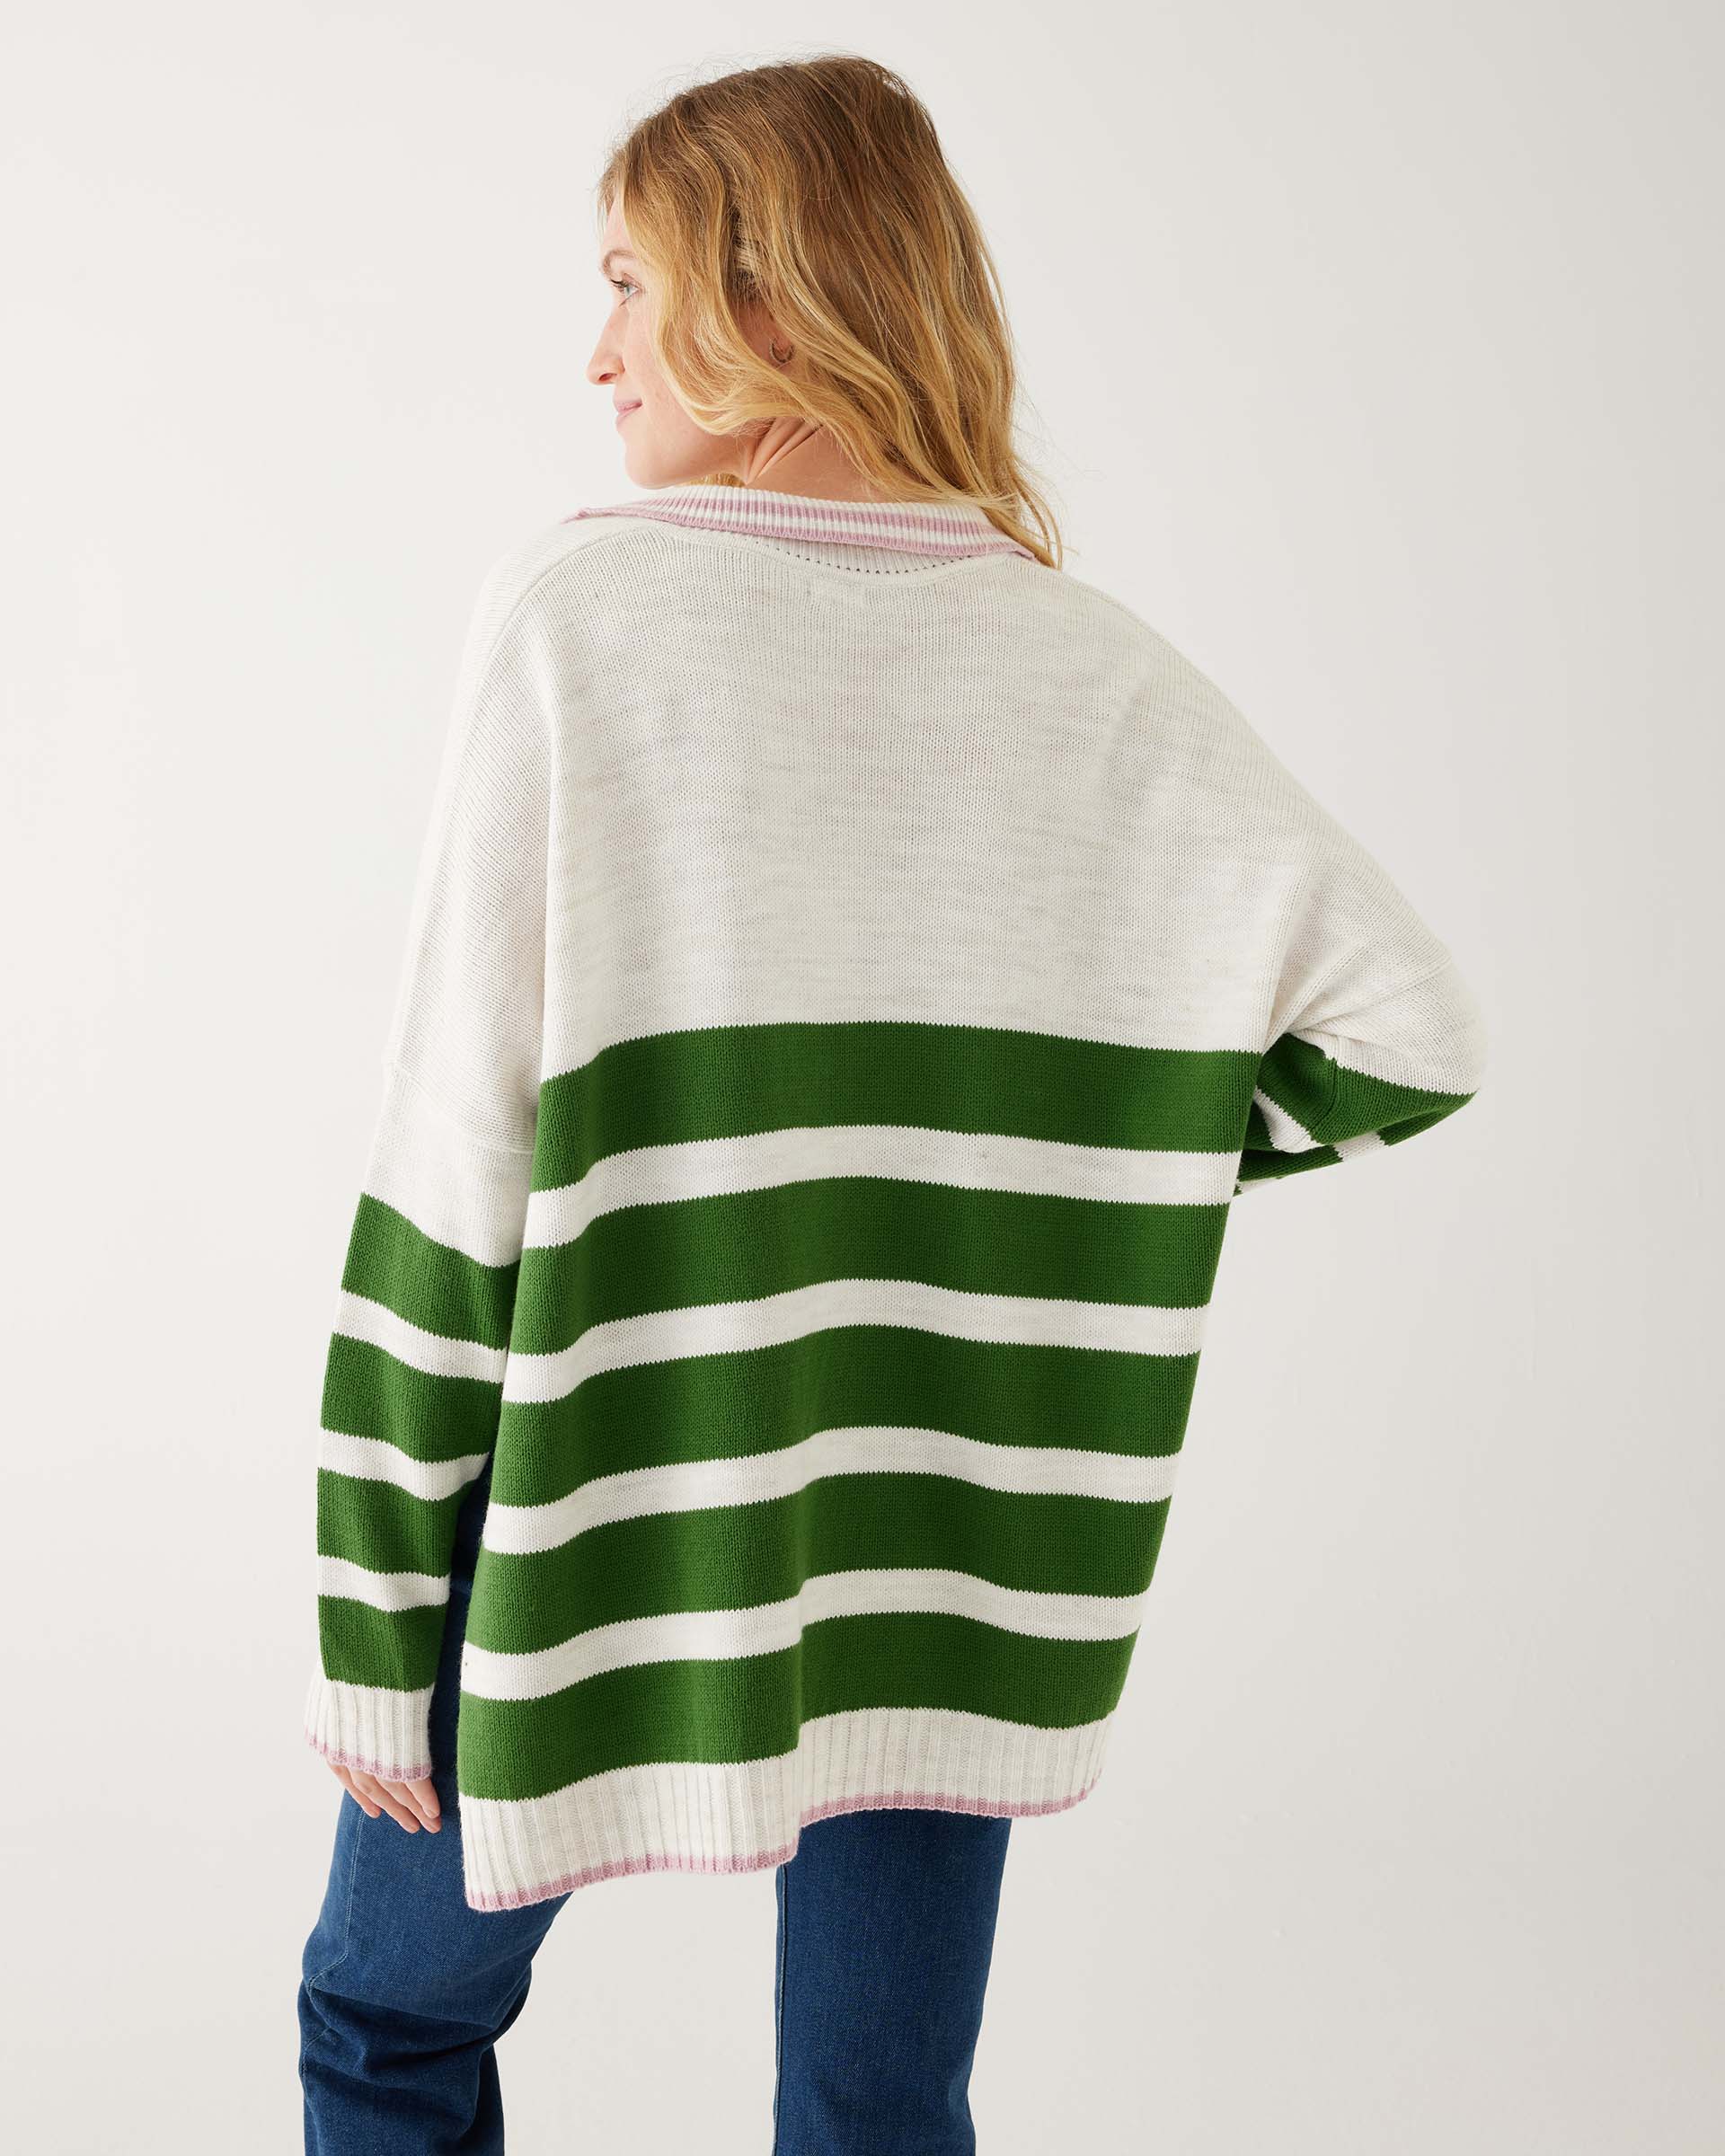 rearview of woman showcasing mersea marina polo sweater in green and sea salt stripe